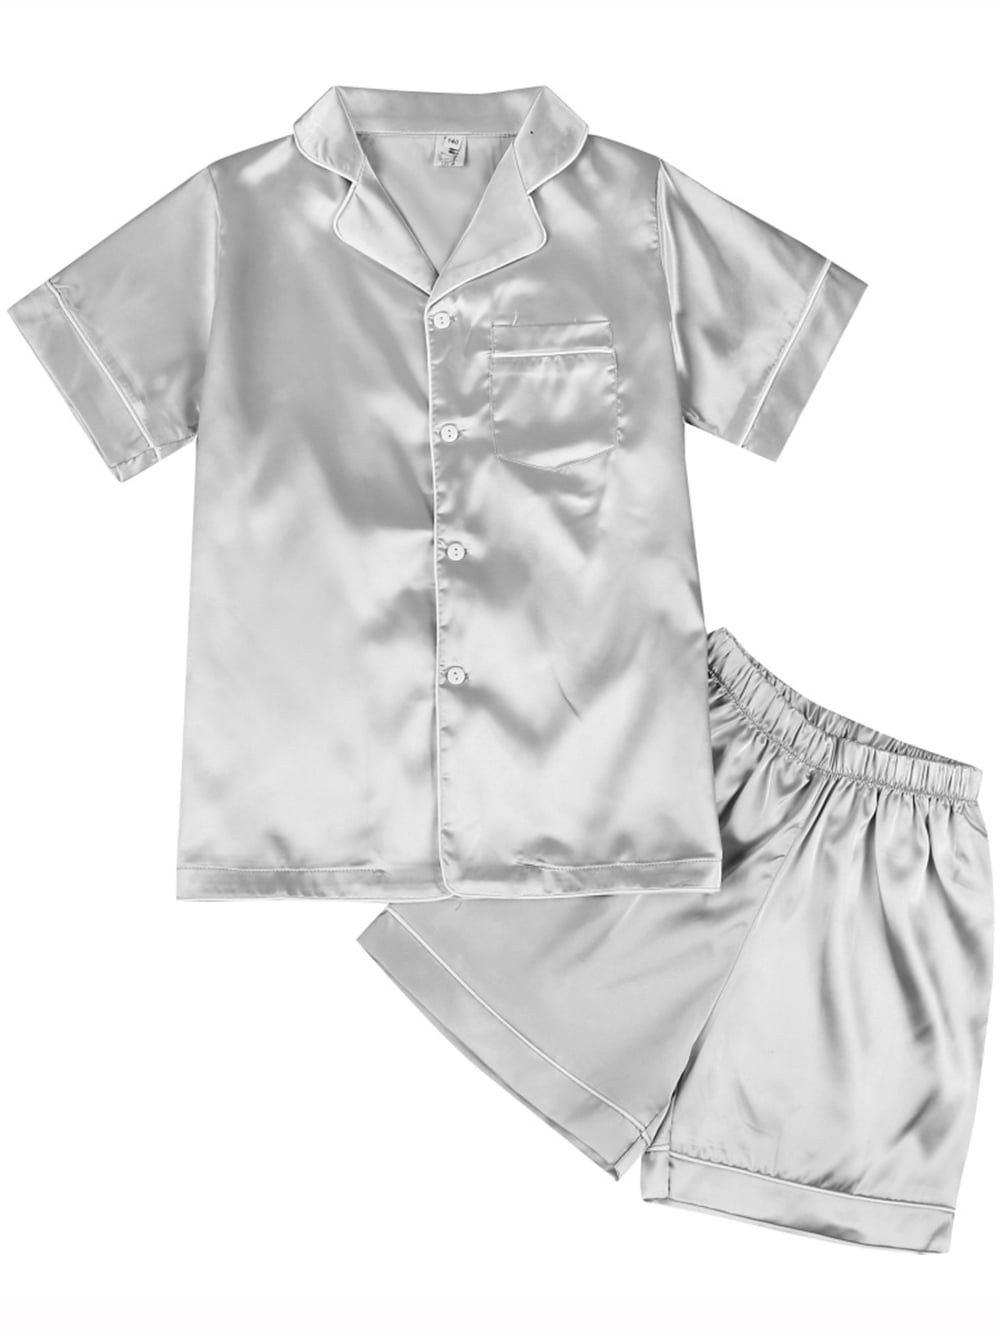 Silk Satin Kids Pyjama Set Long Sleeve Sleepwear For Boys And Girls, Autumn/ Winter Nightwear Style #230601 From Pang07, $7.7